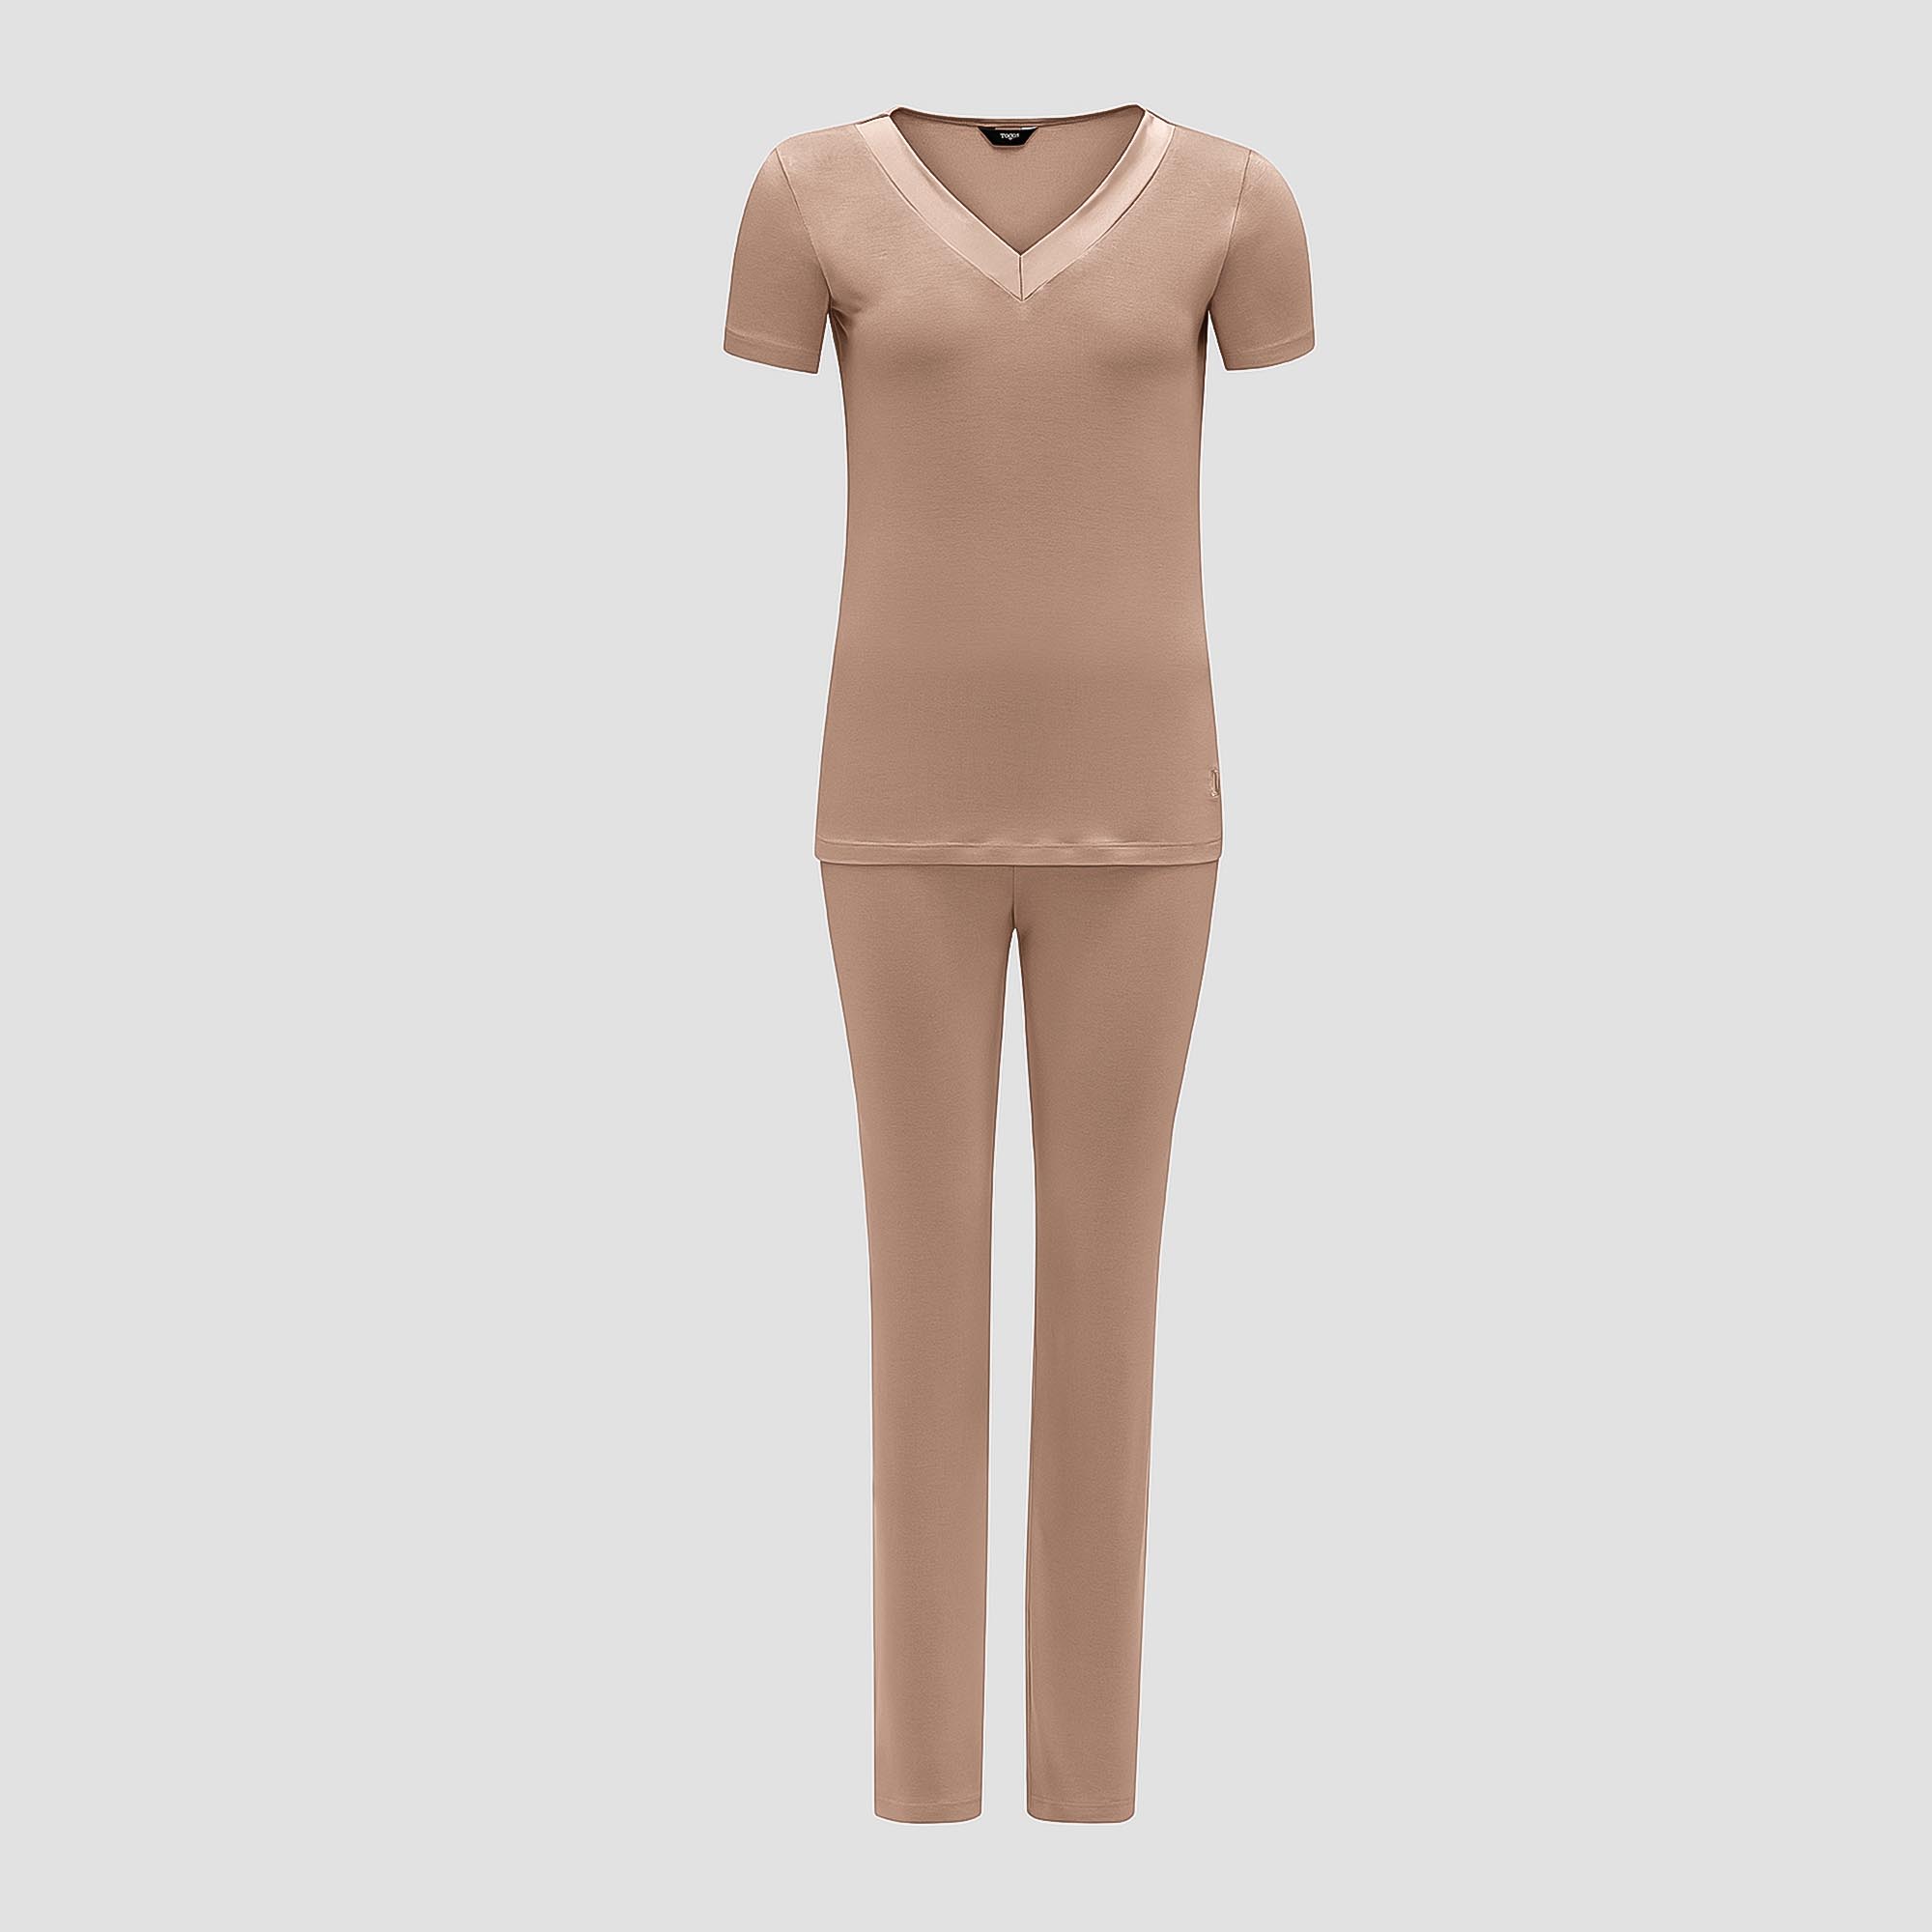 Пижама Togas Ингелла розово-бежевая женская XL(50) 2 предмета